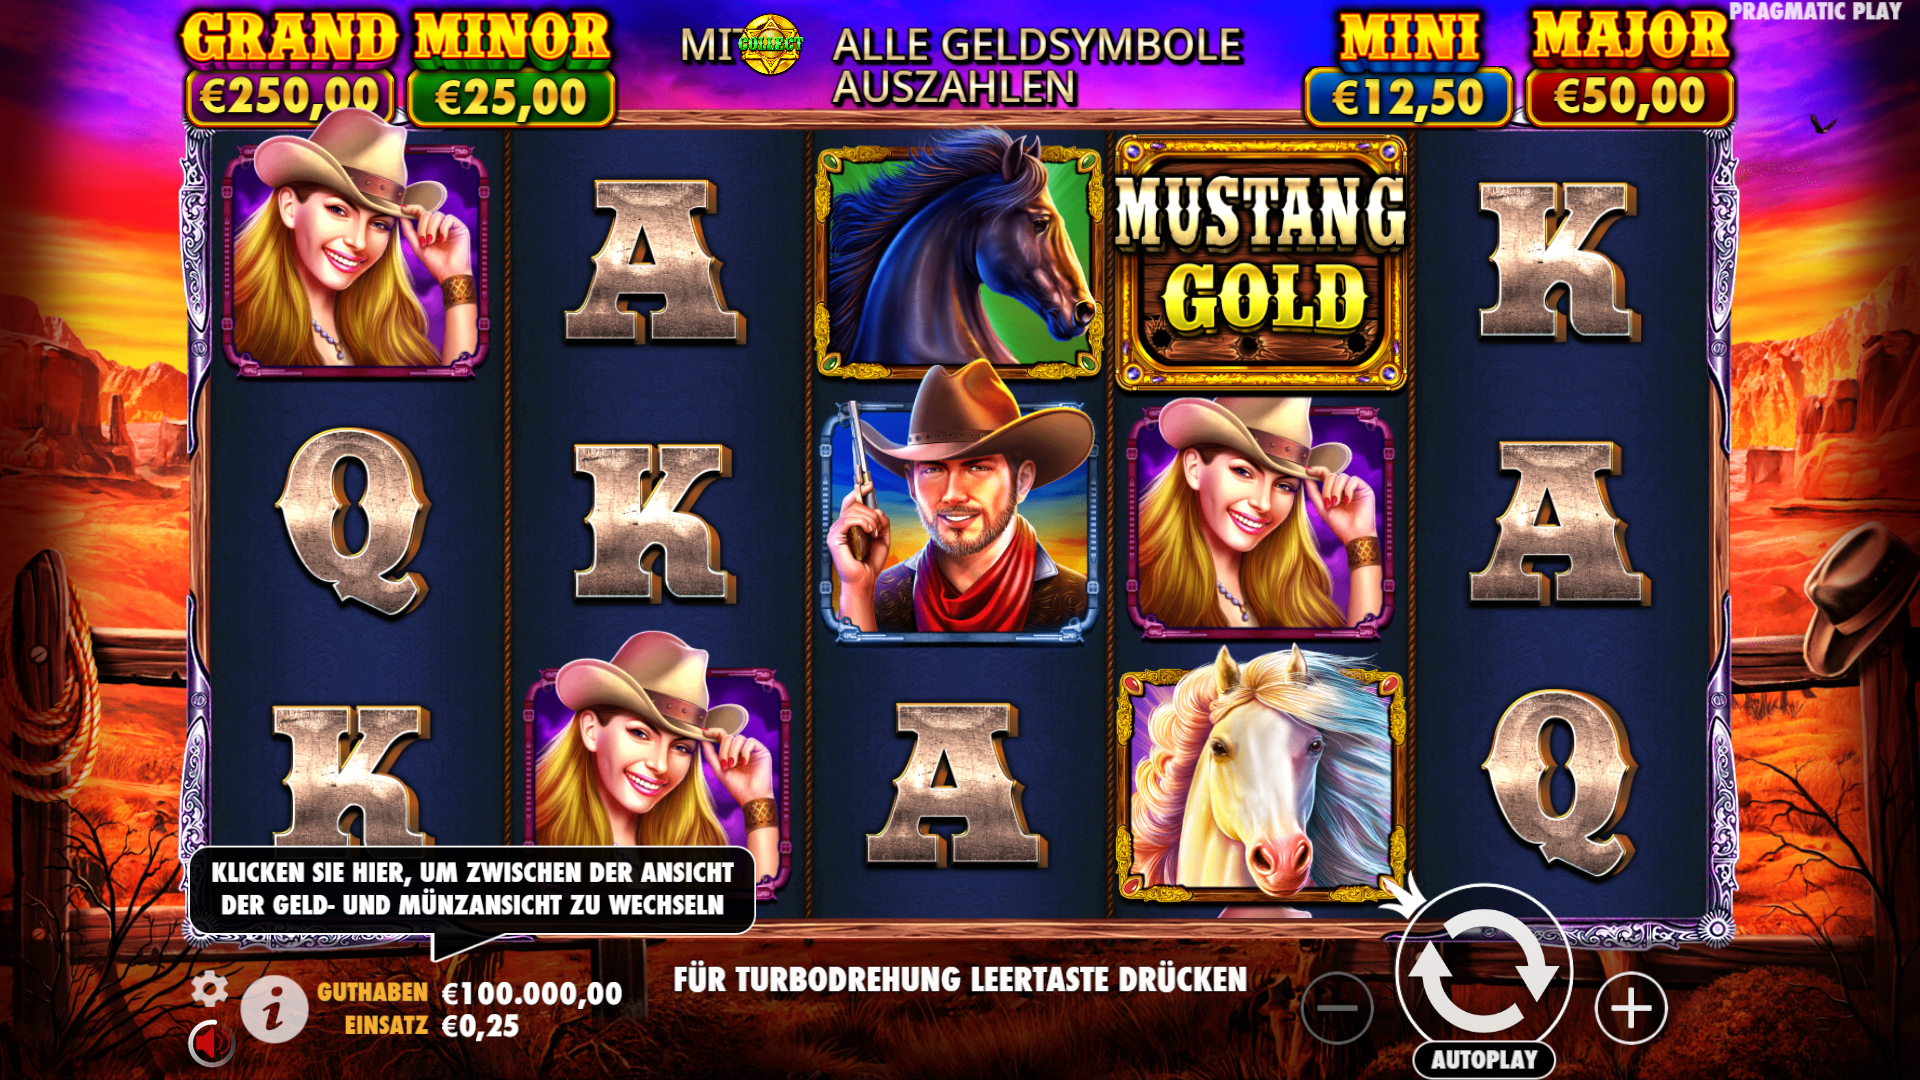 Bonusspiel mit Jackpot im Mustang Gold-Slot